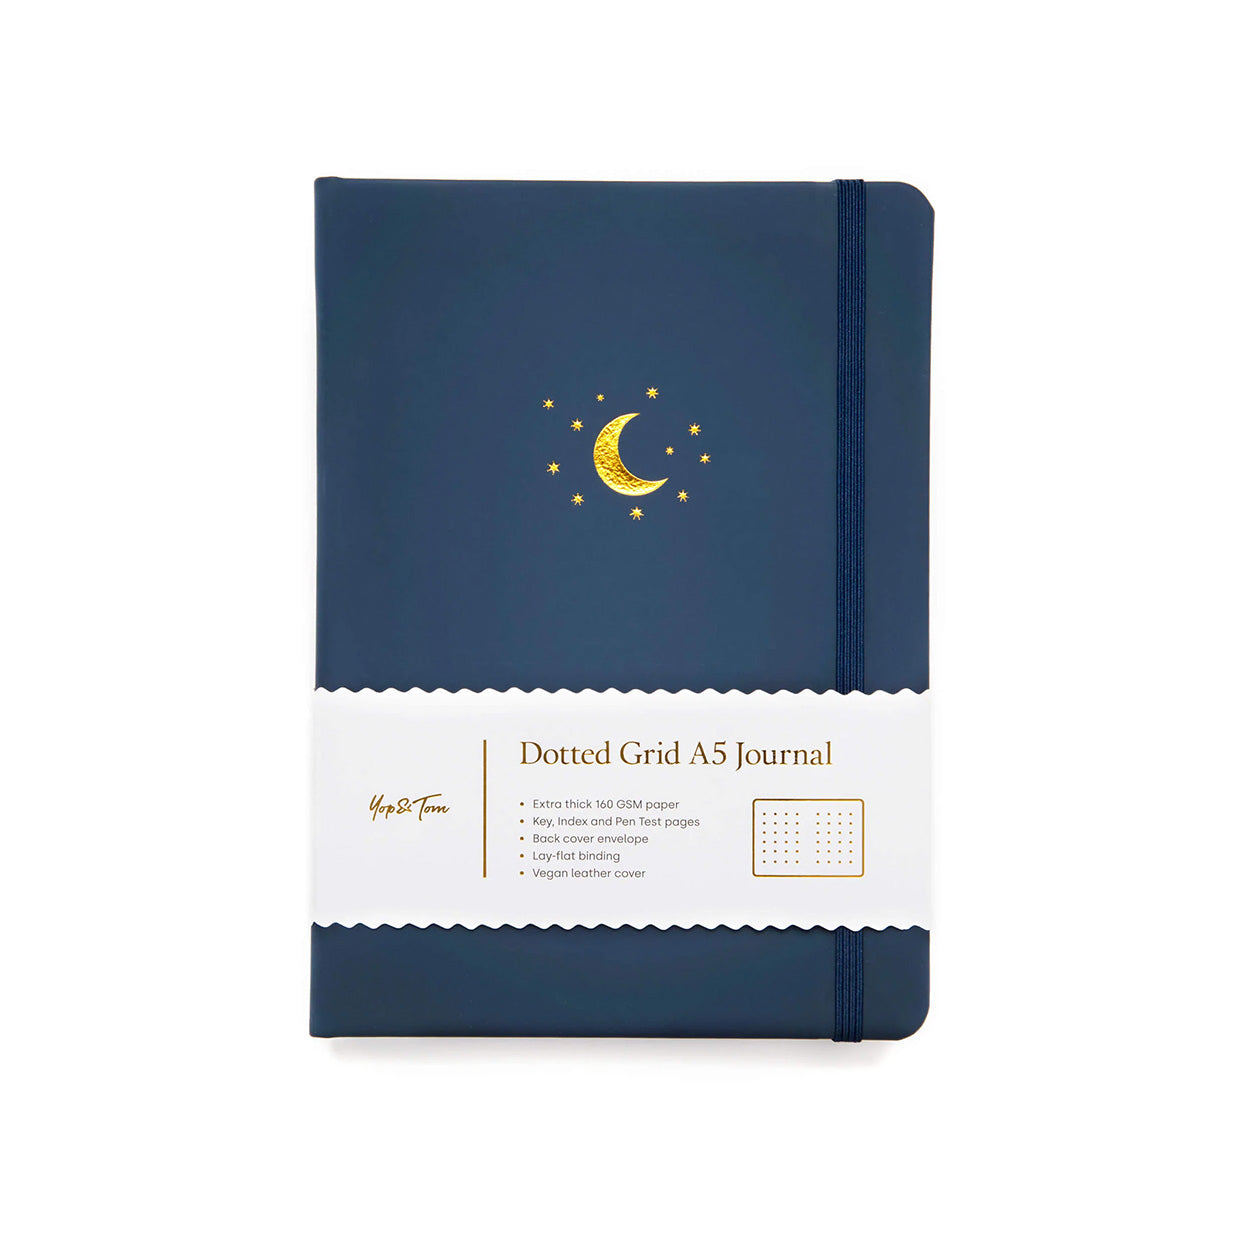 Yop & Tom - A5 Dot Grid Journal - Moon and Stars - Midnight Blue-Notitieboek-DutchMills